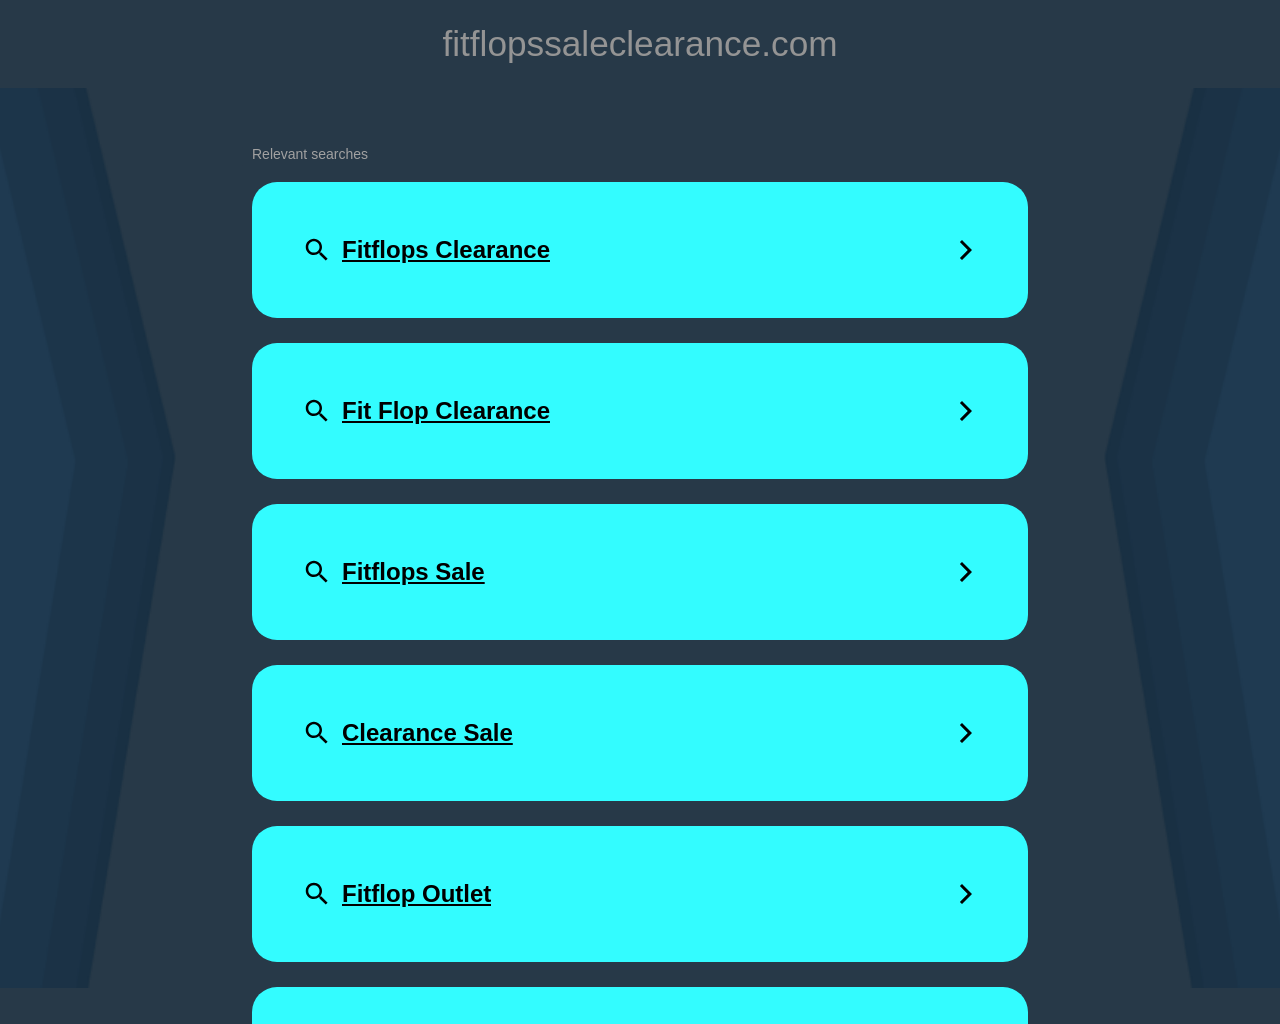 fitflopssaleclearance.com